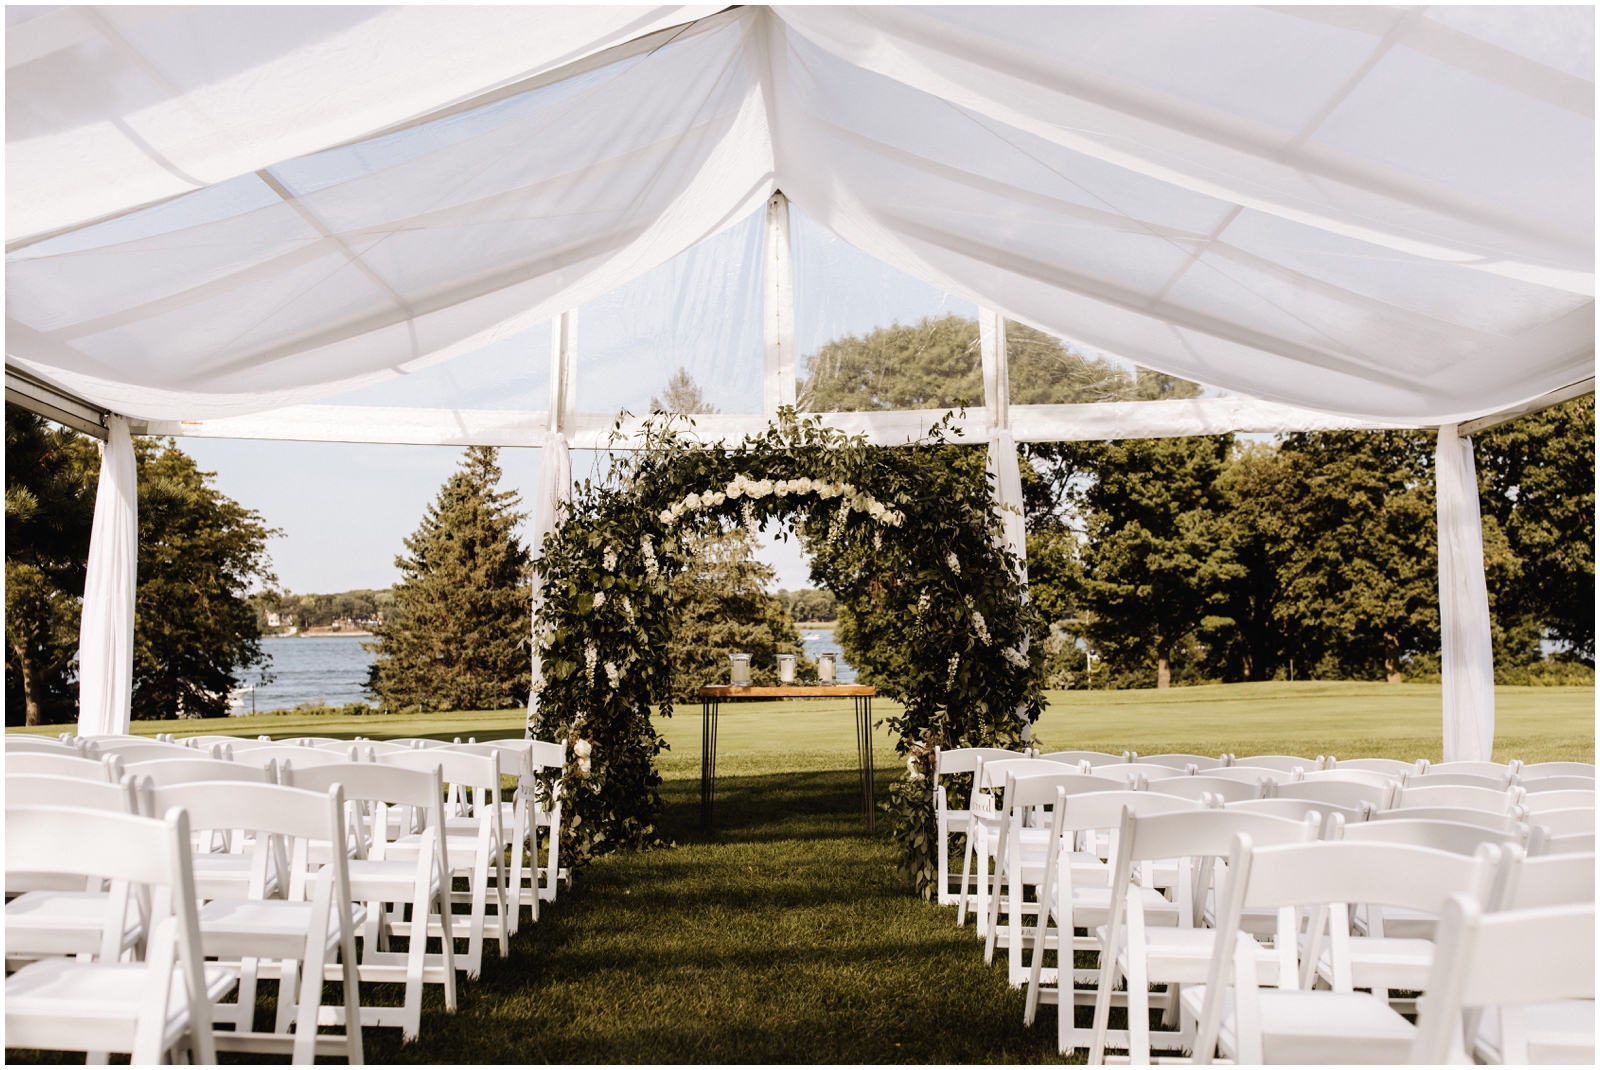  Minnesota Wedding Planner. Lafayette Club Wedding. Outdoor Tent Wedding Ceremony 